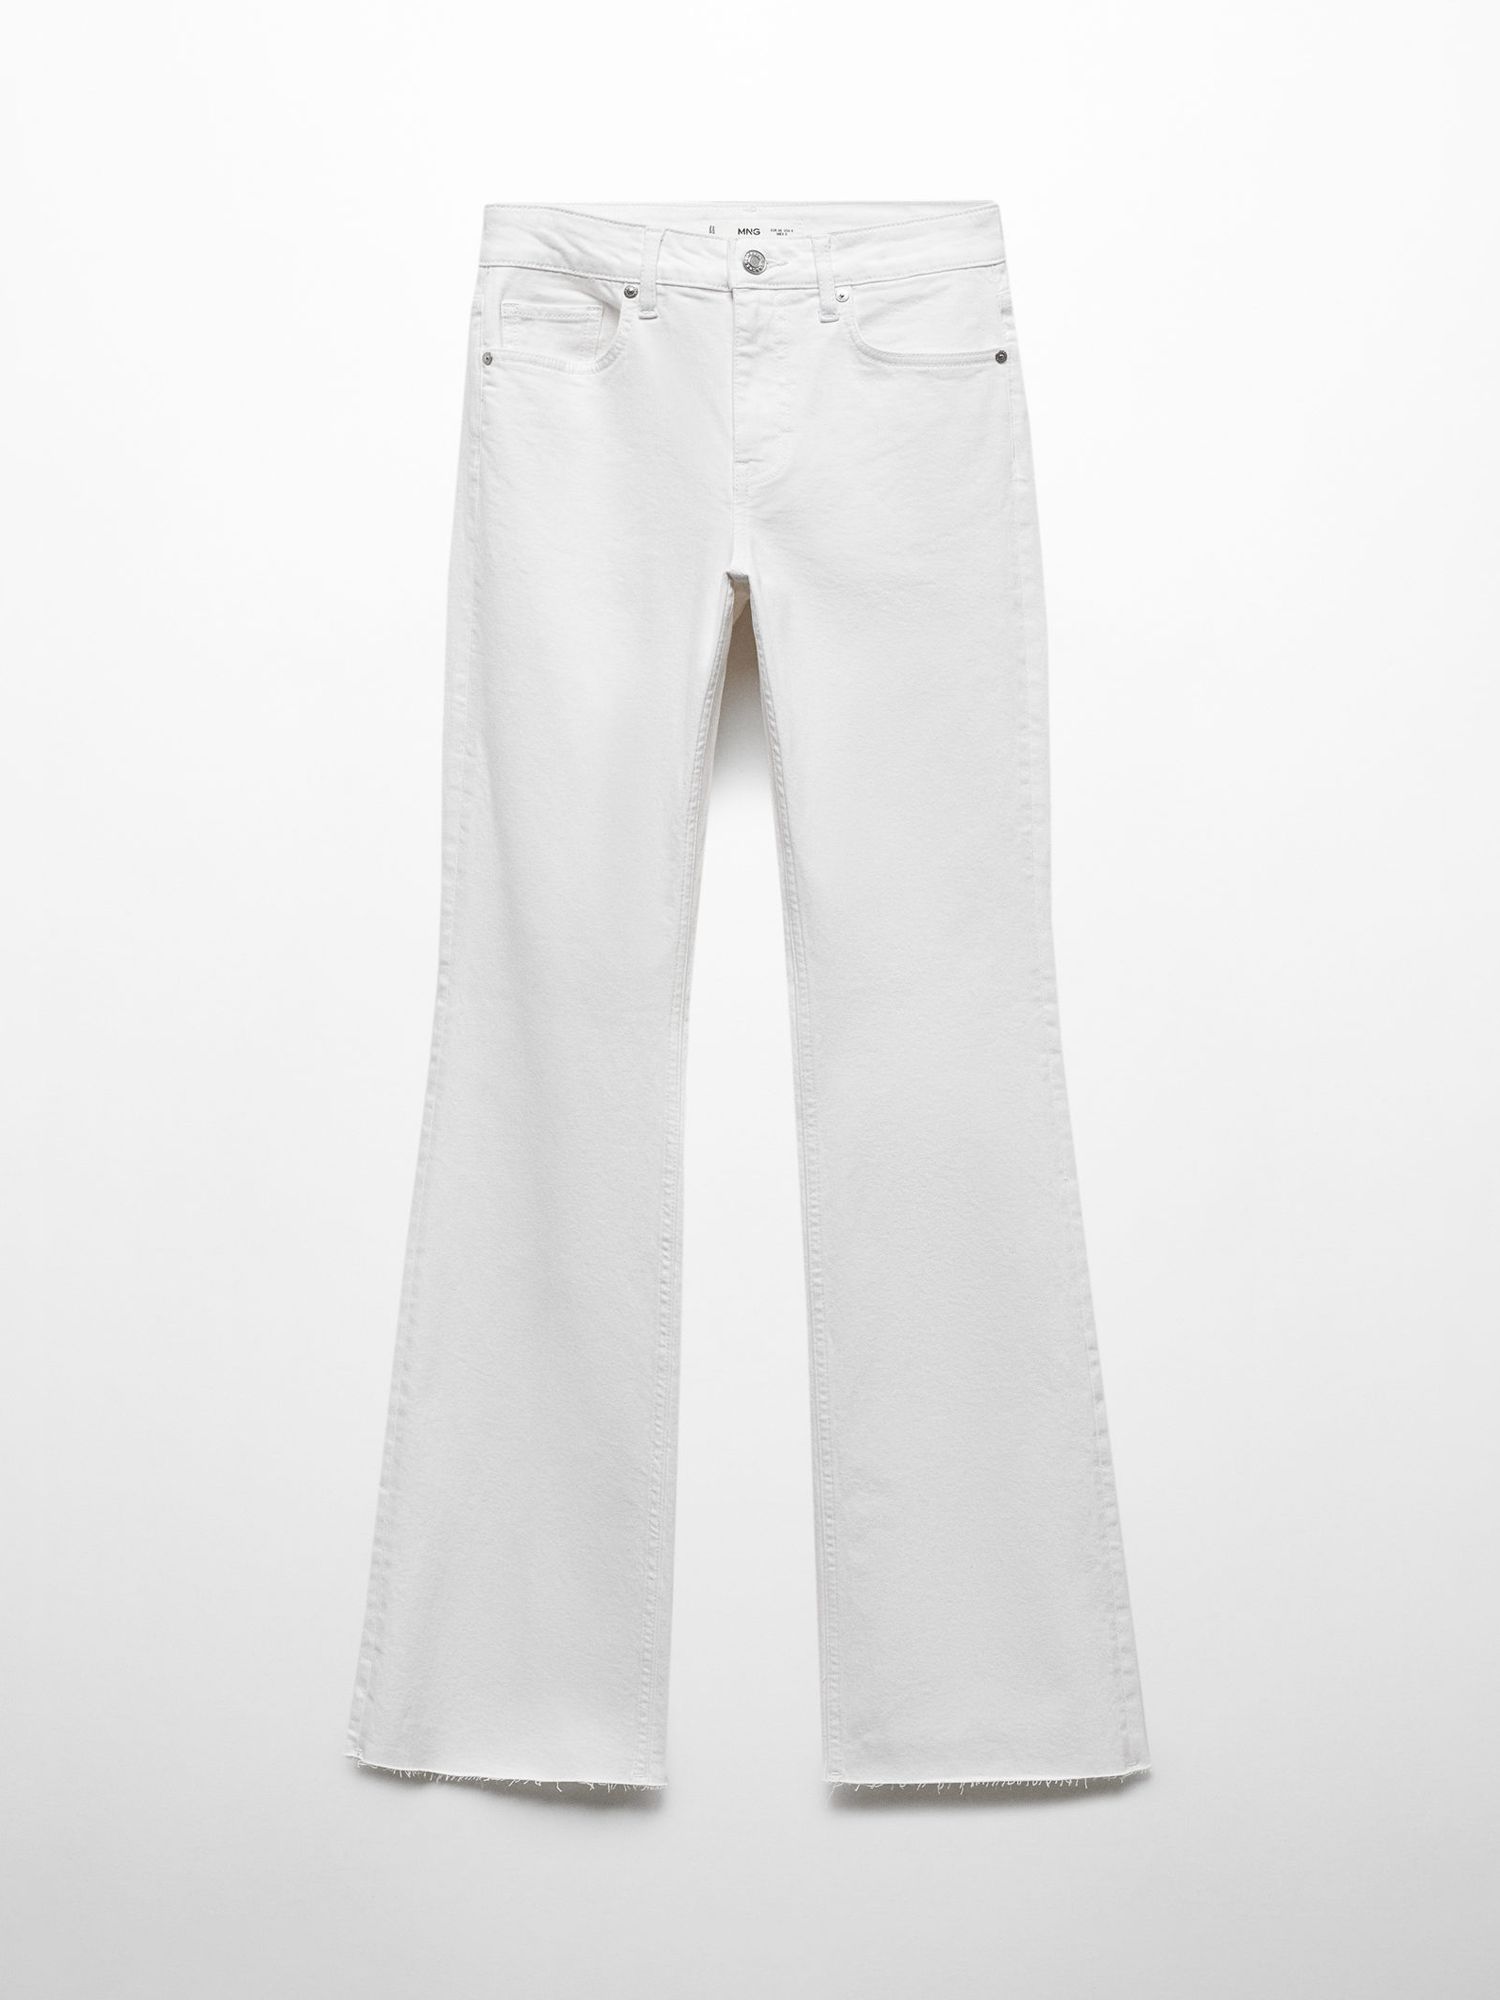 Mango Fiona Flared Jeans, White, 10